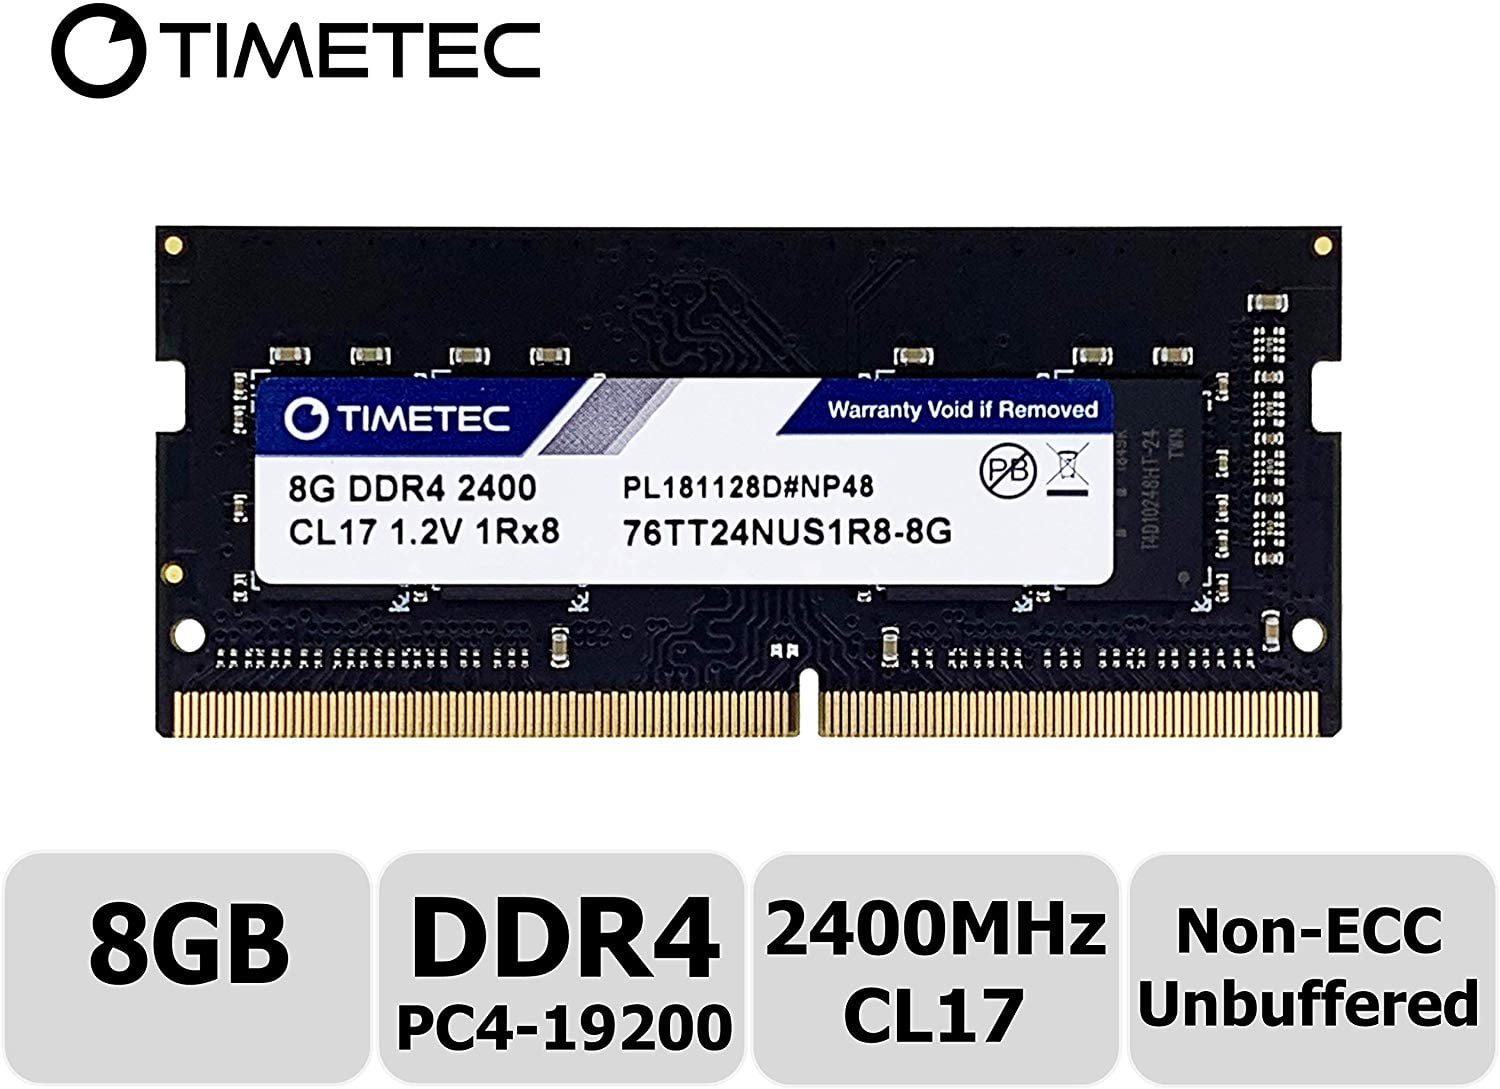 8GB DDR4 2400MHz PC4-19200 SODIMM 260 pin Sodimm Laptop Memory RAM 8G 2400 